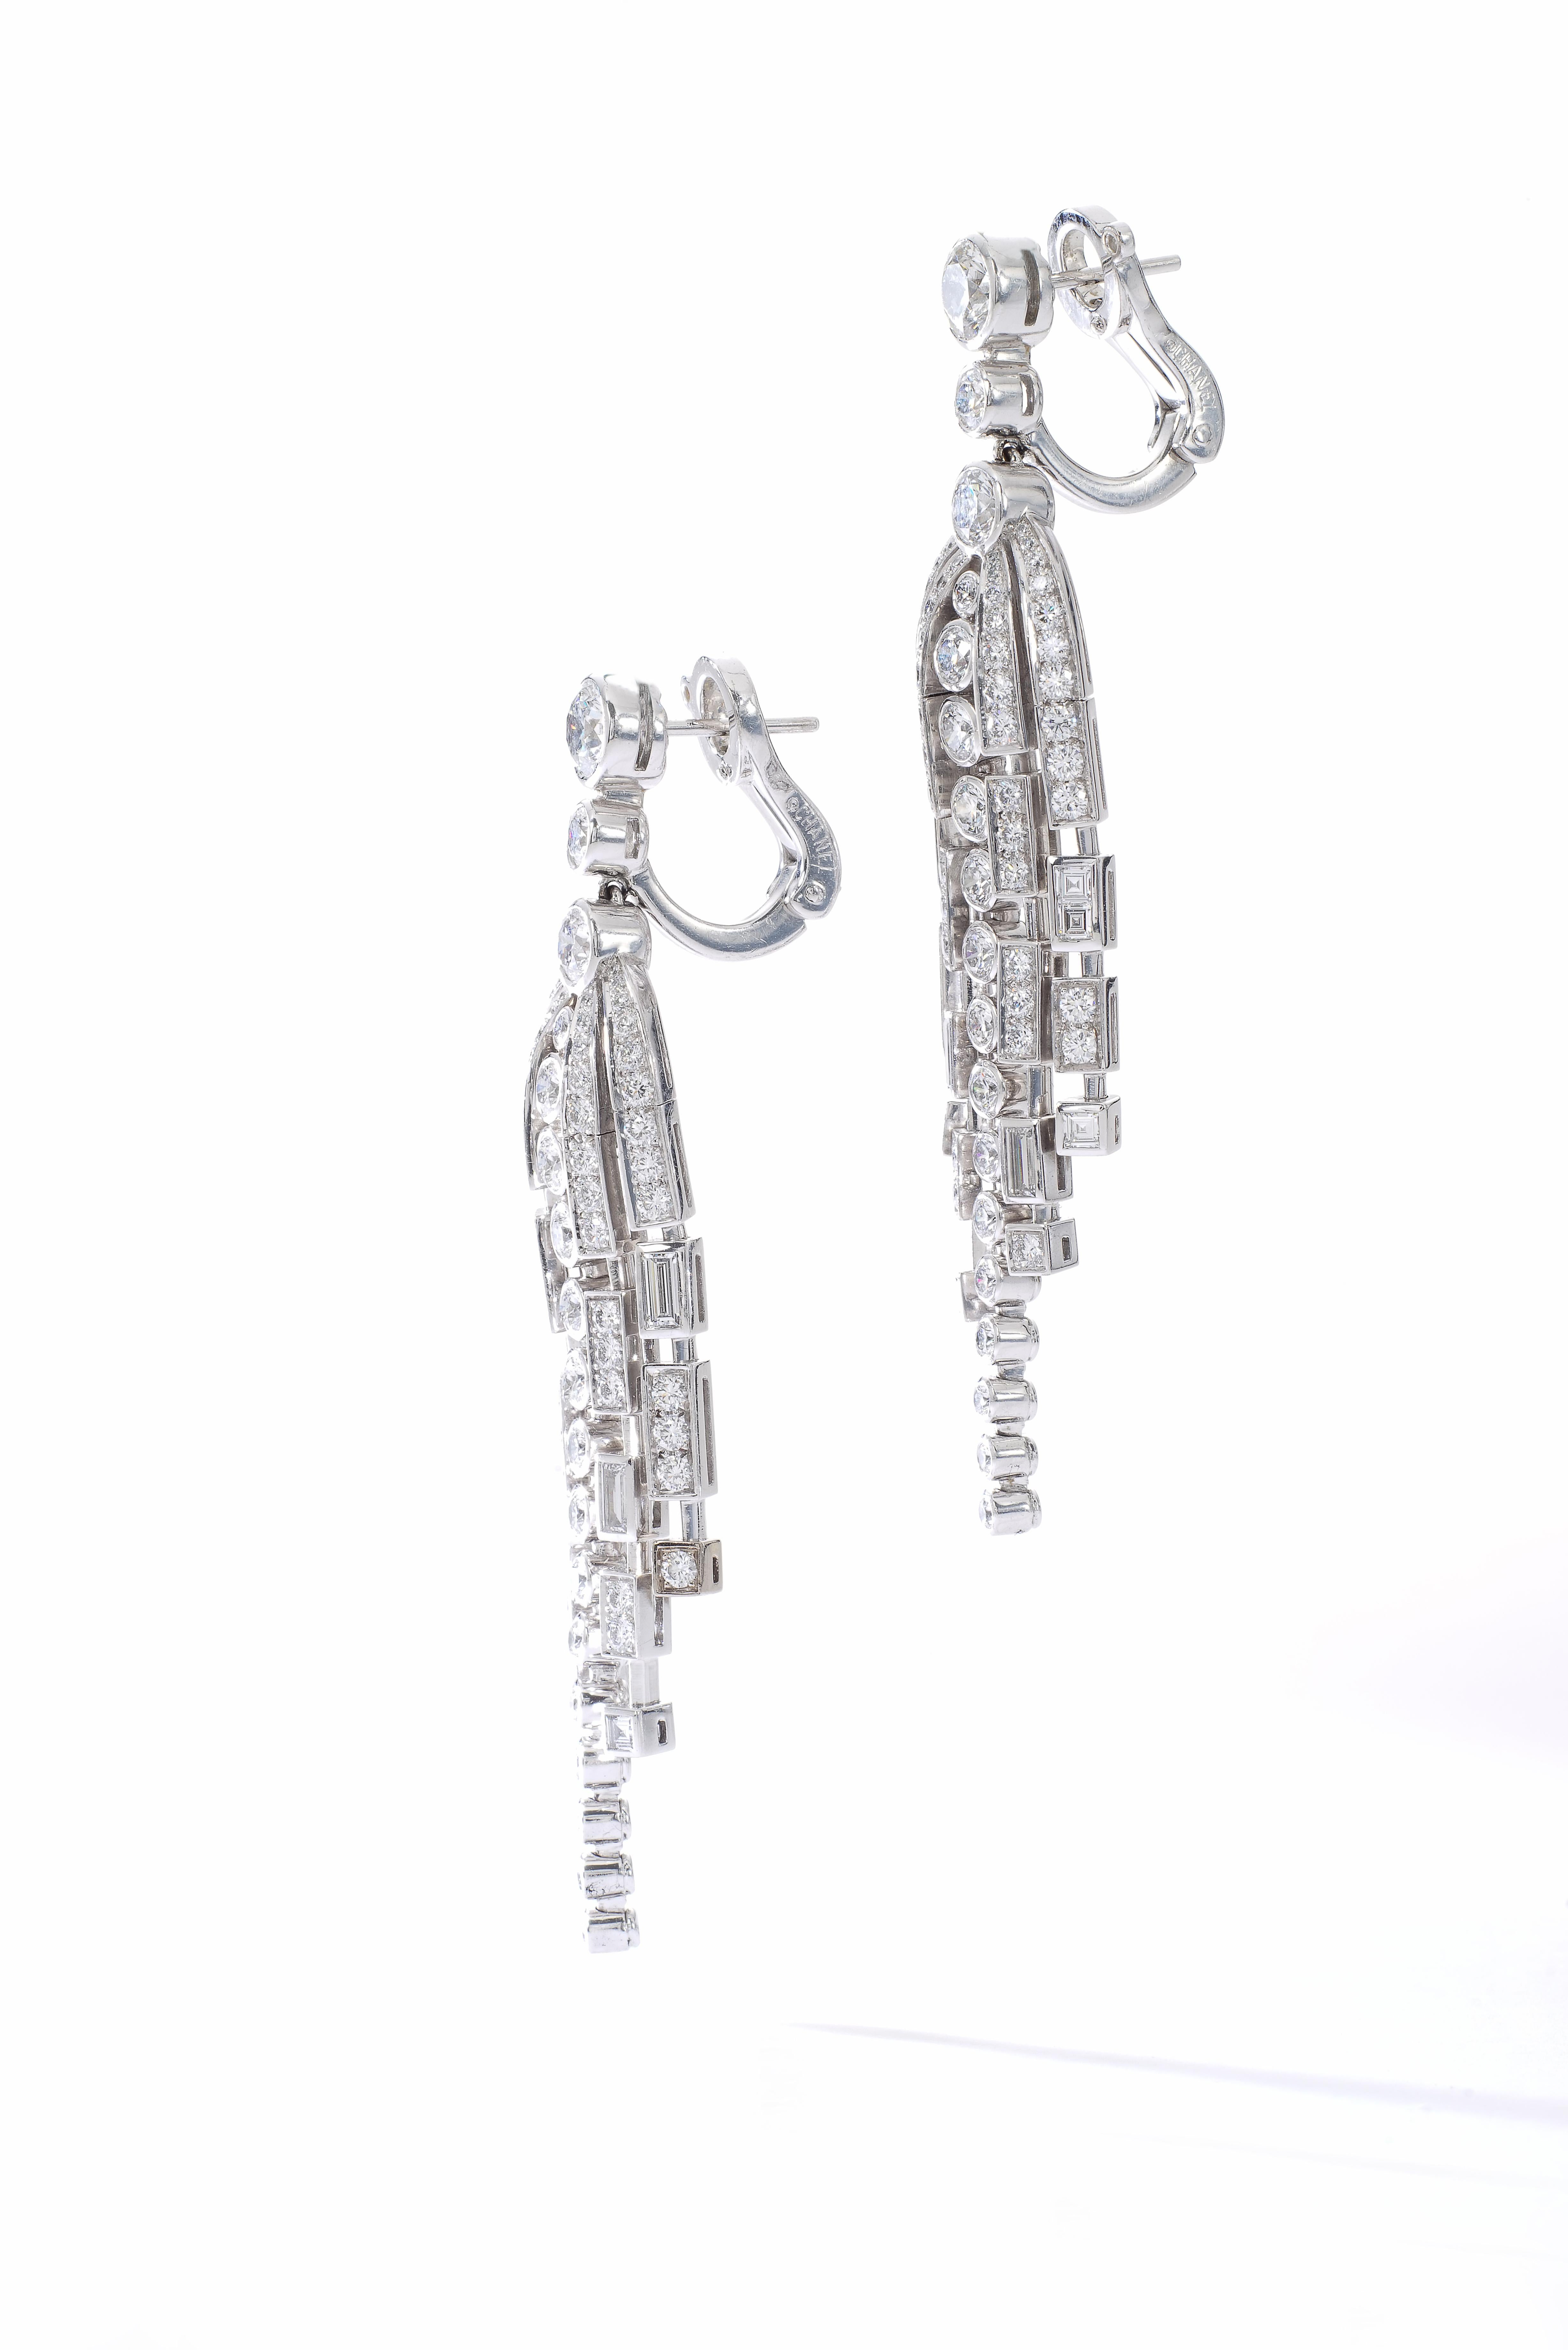 chanel diamond earrings price